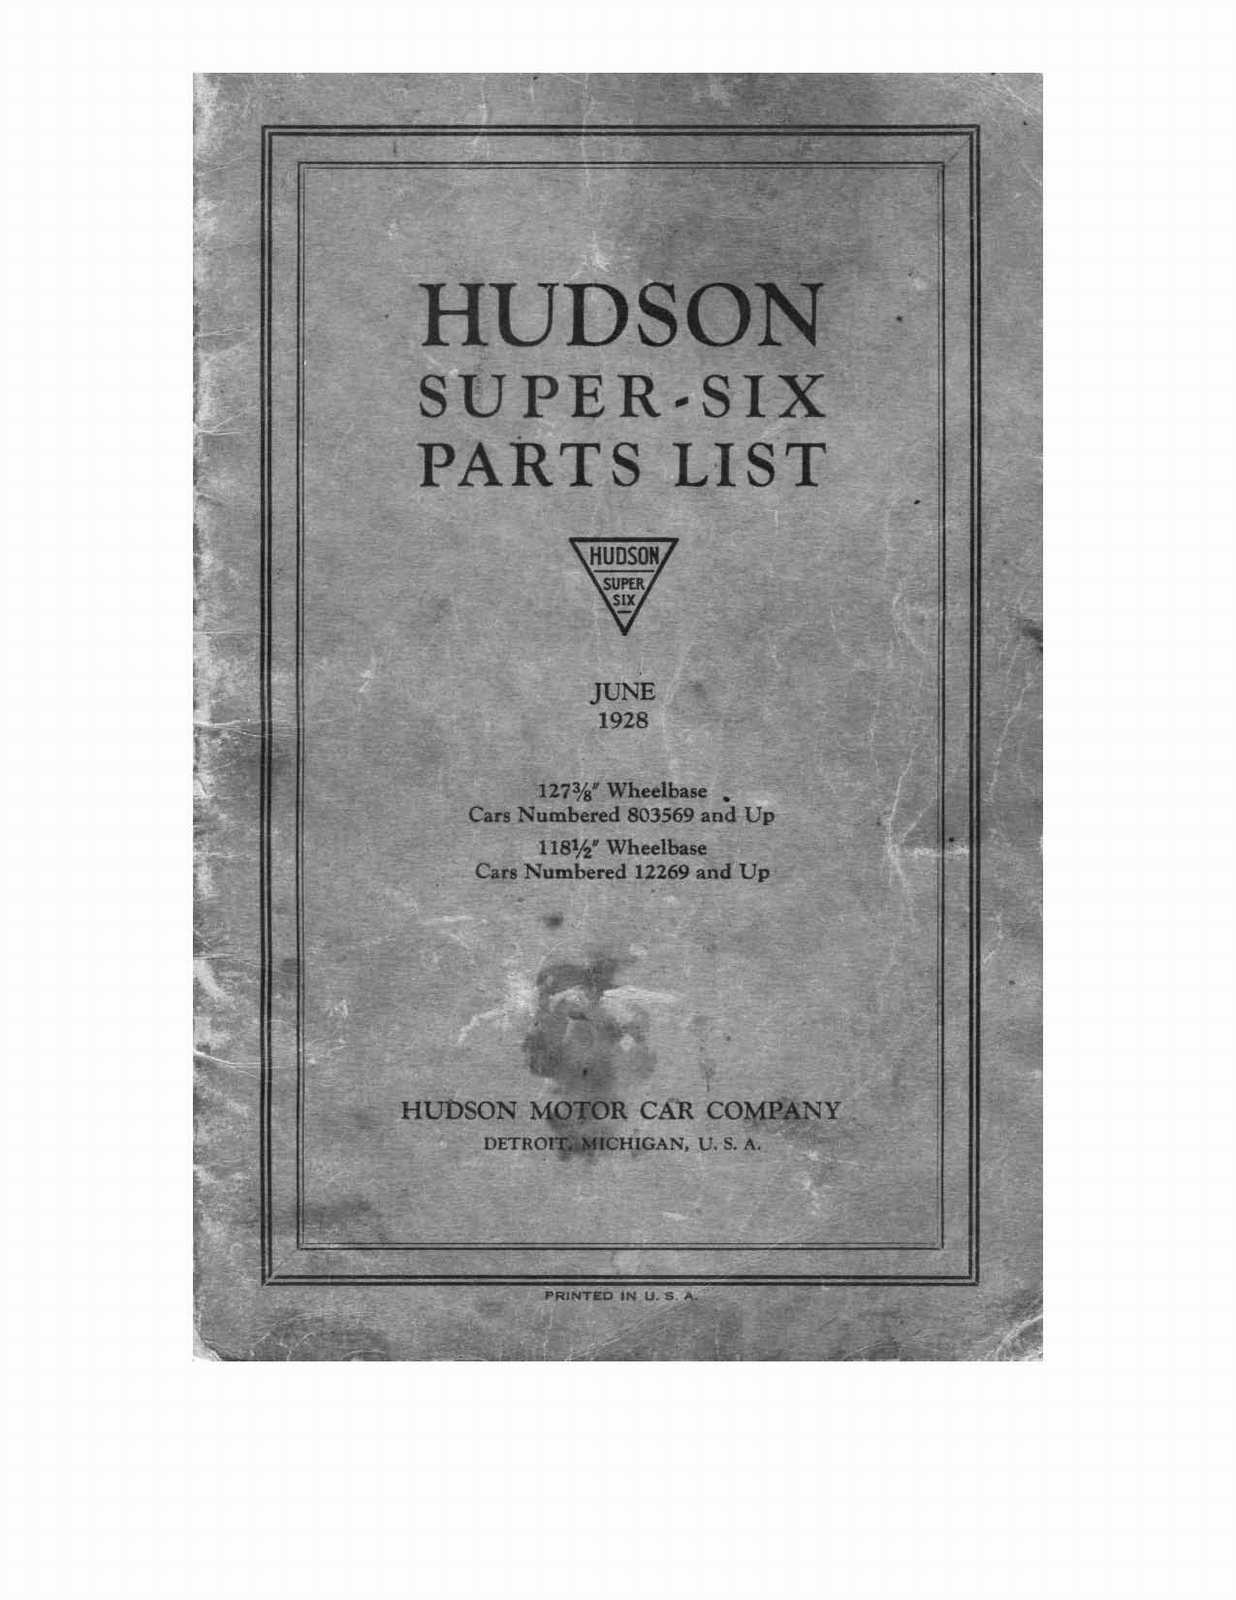 n_1928 Hudson Parts List-01.jpg